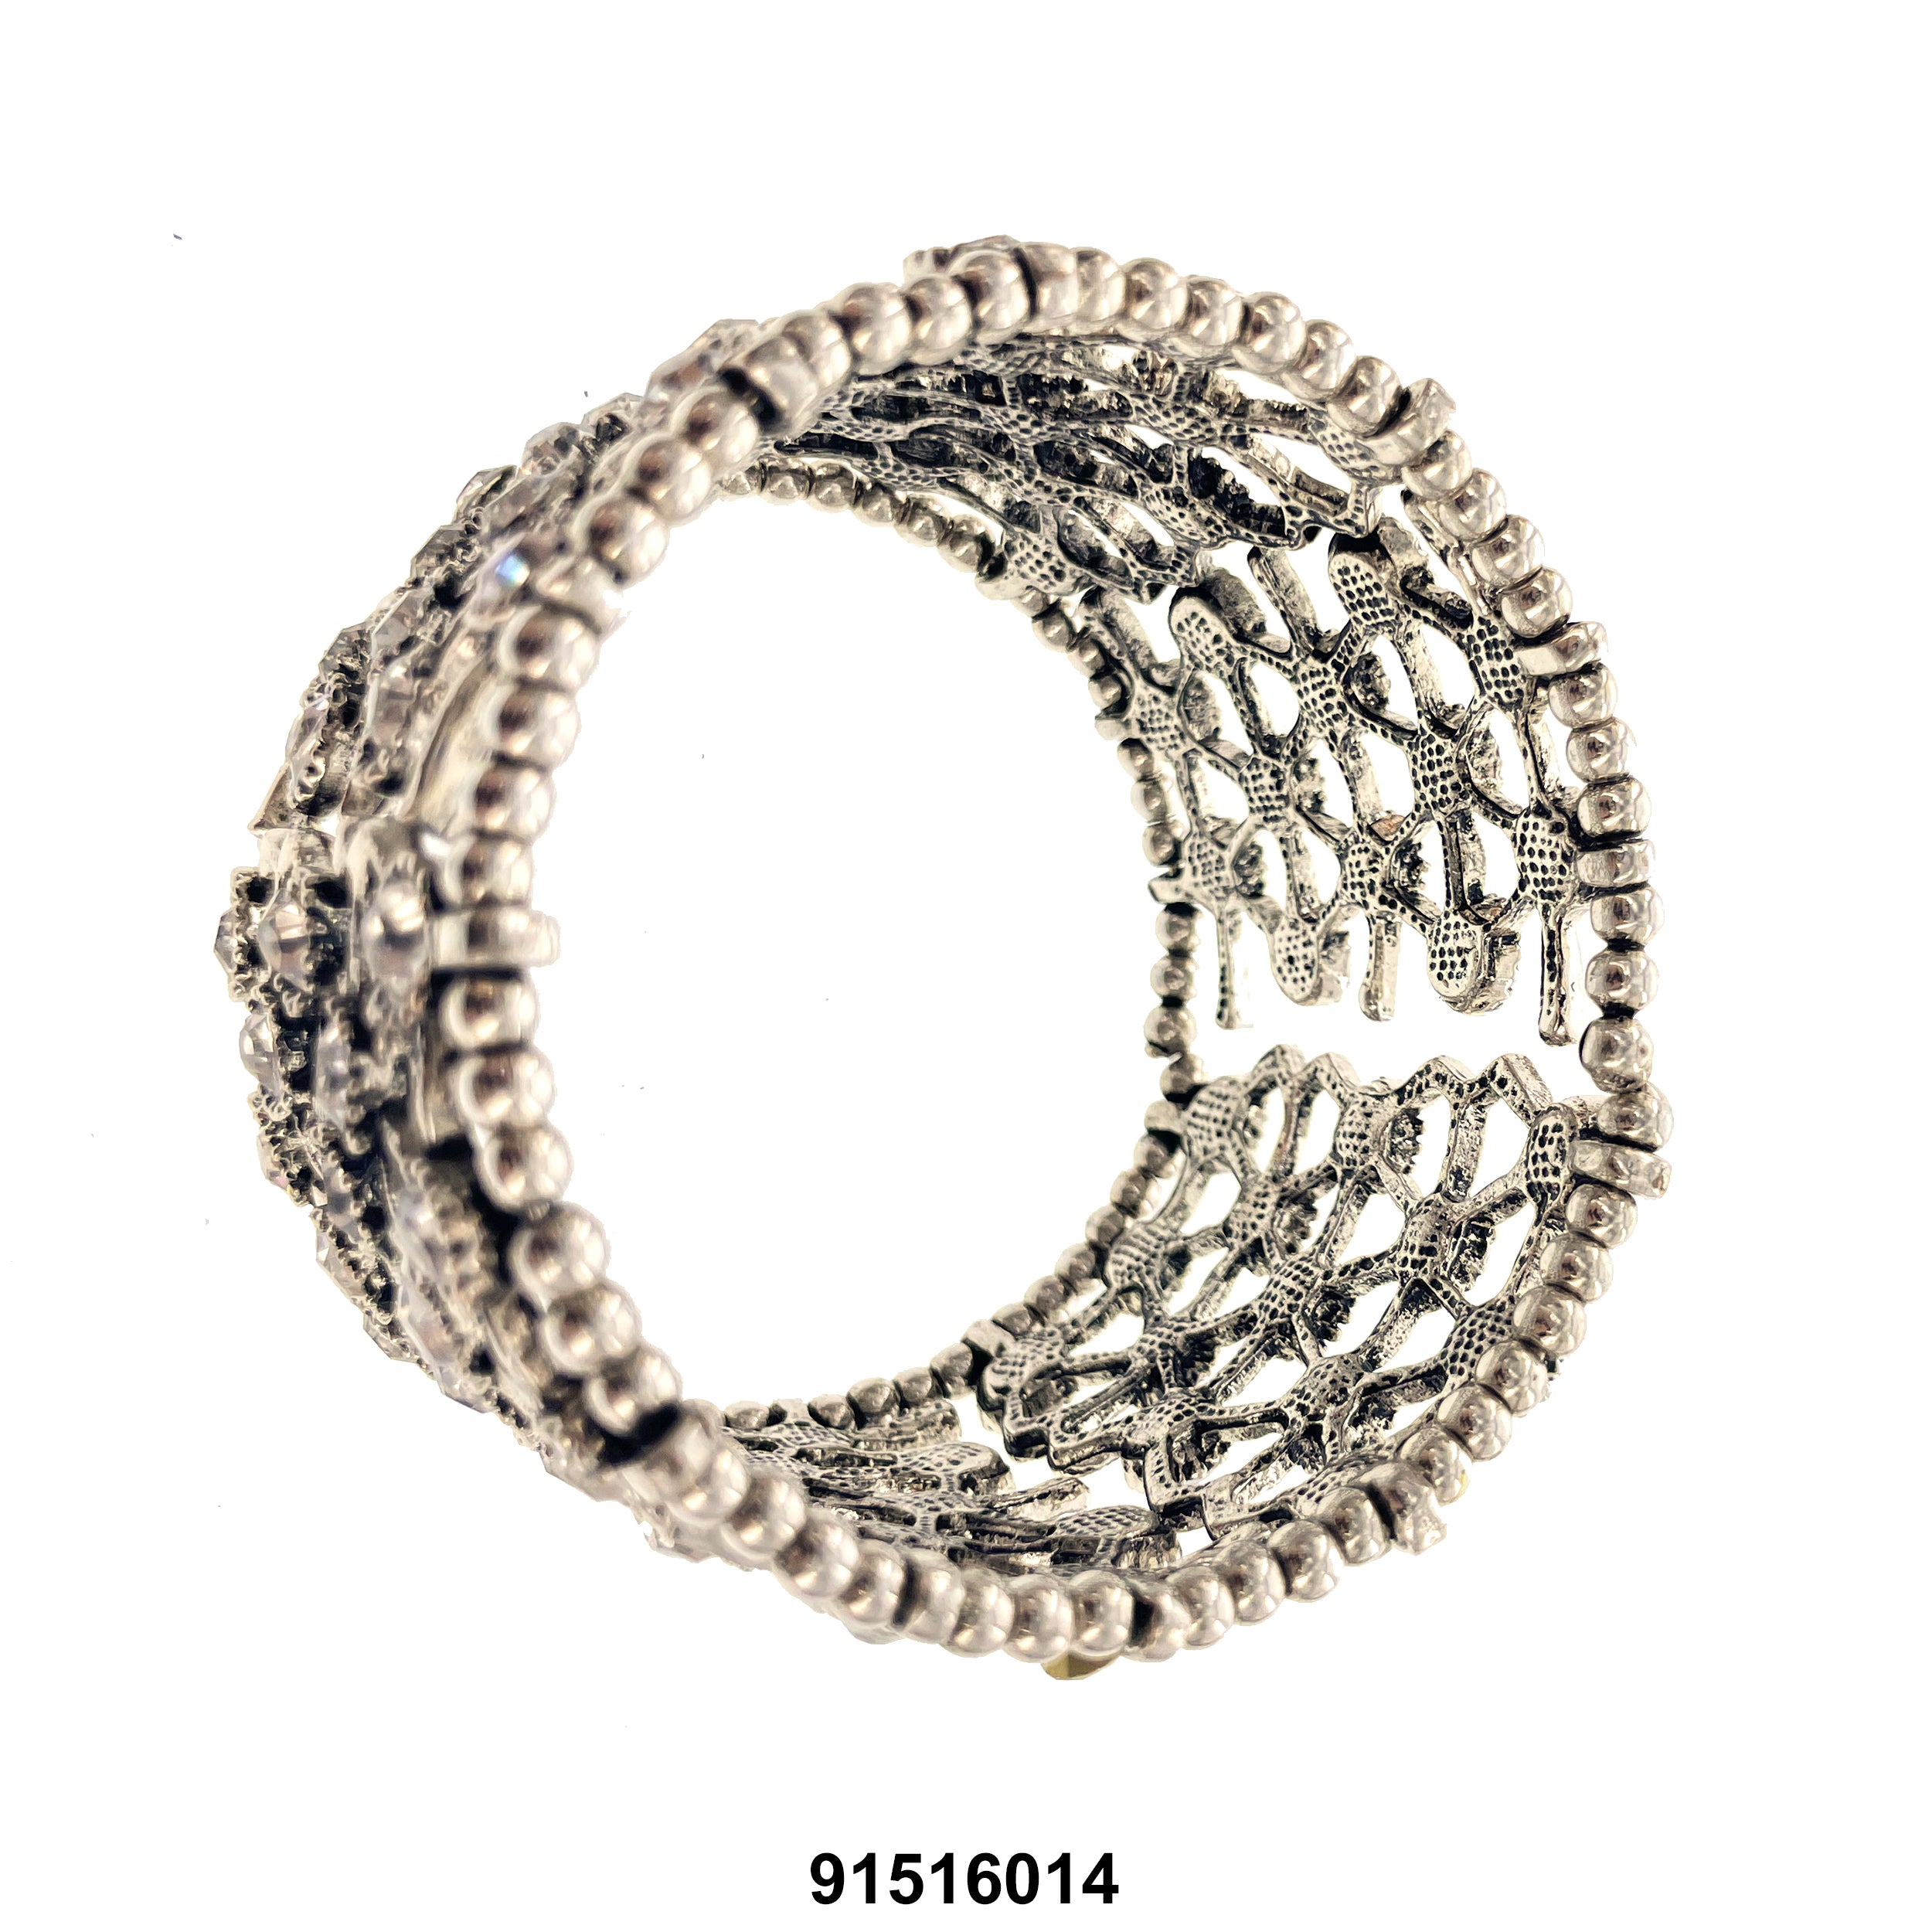 Spider Cuff Bangle Bracelet 91516014